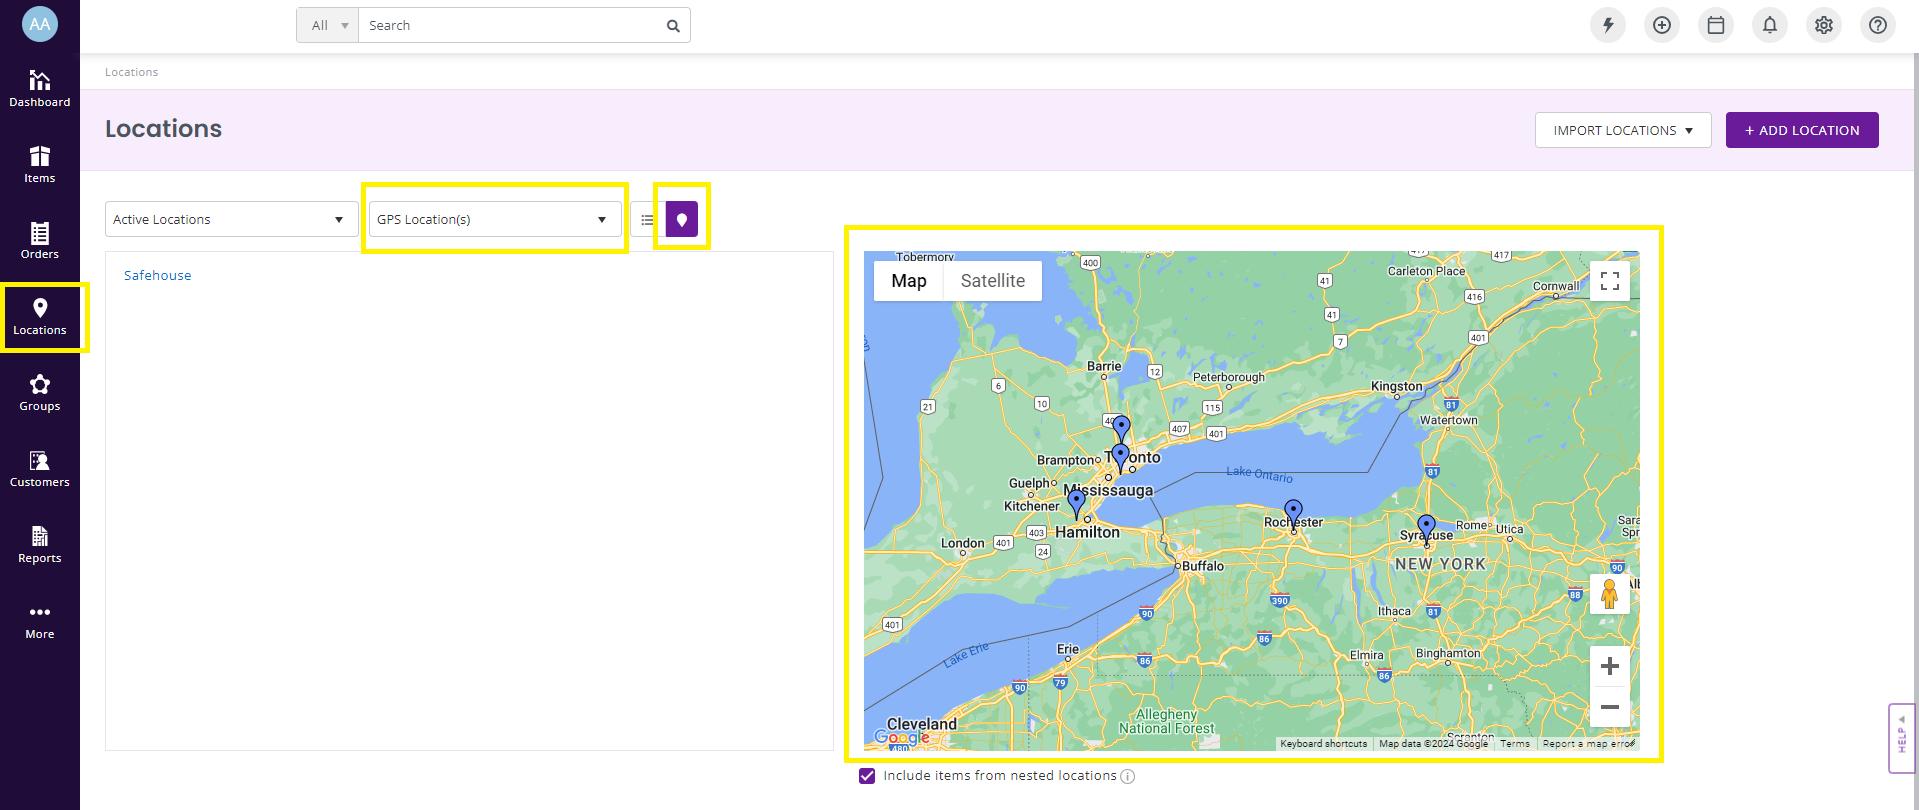 06A - GPS API Asset Location Tracking - Track all asset locations in Locations by choosing GPS Location